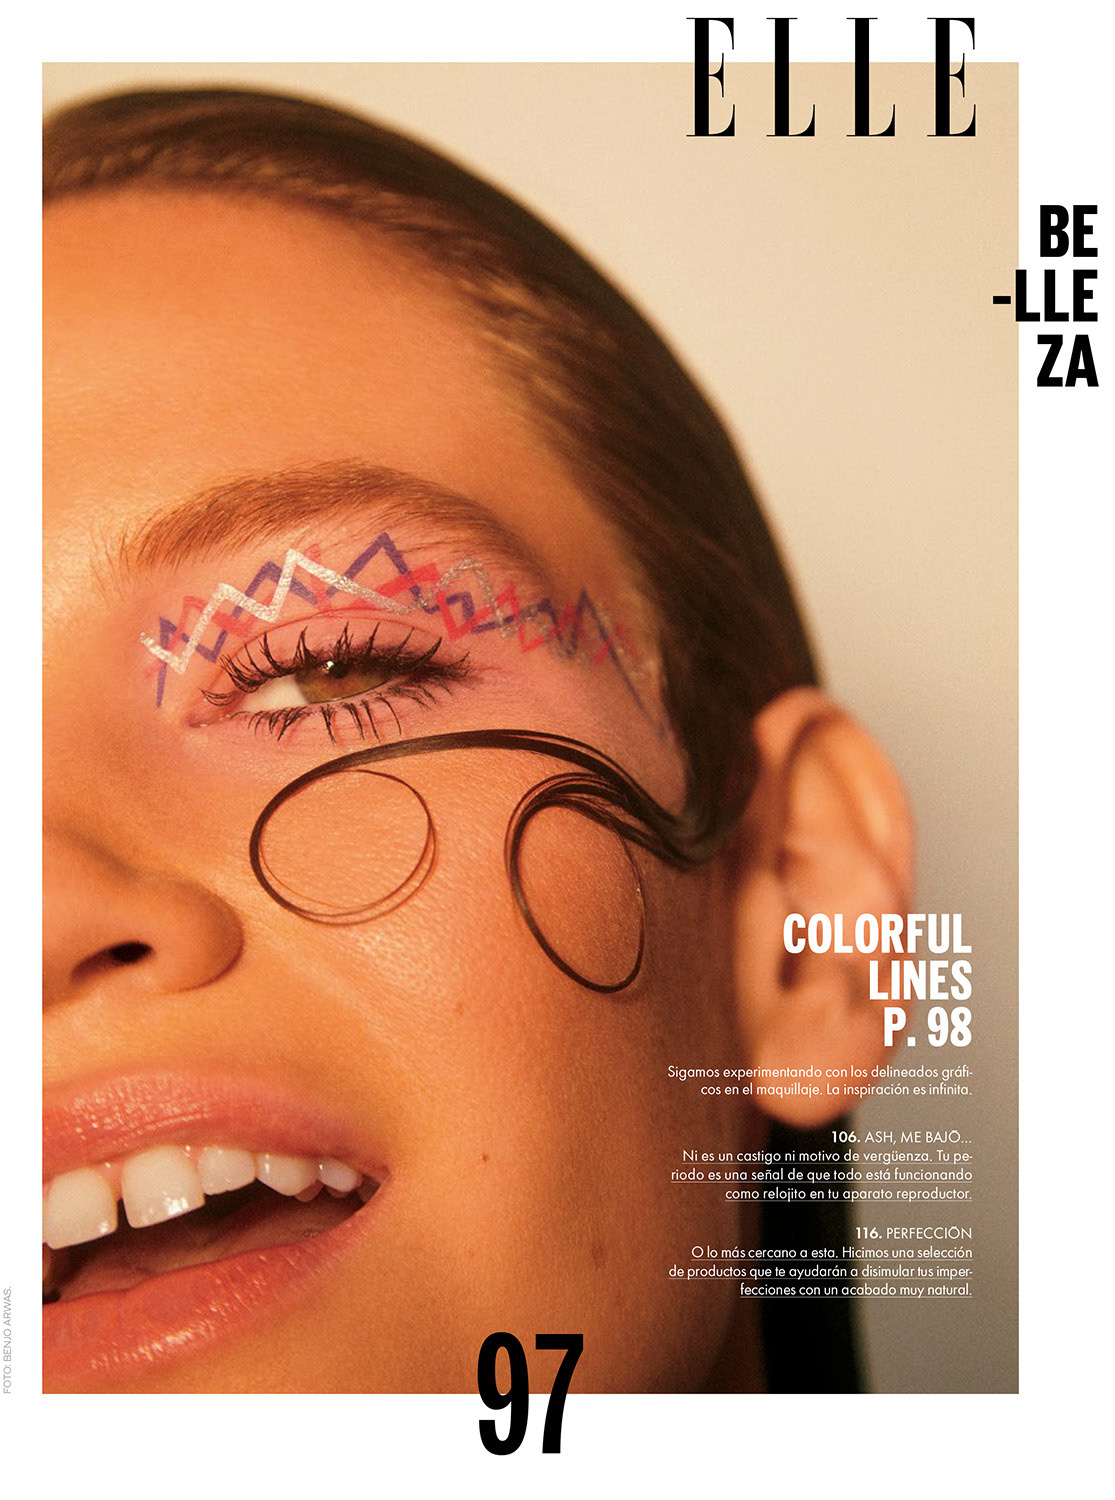 beauty benjo arwas editorial elle dawson Elle Magazine eyeliner Fashion Photogrpaher hair style Los Angeles makeup